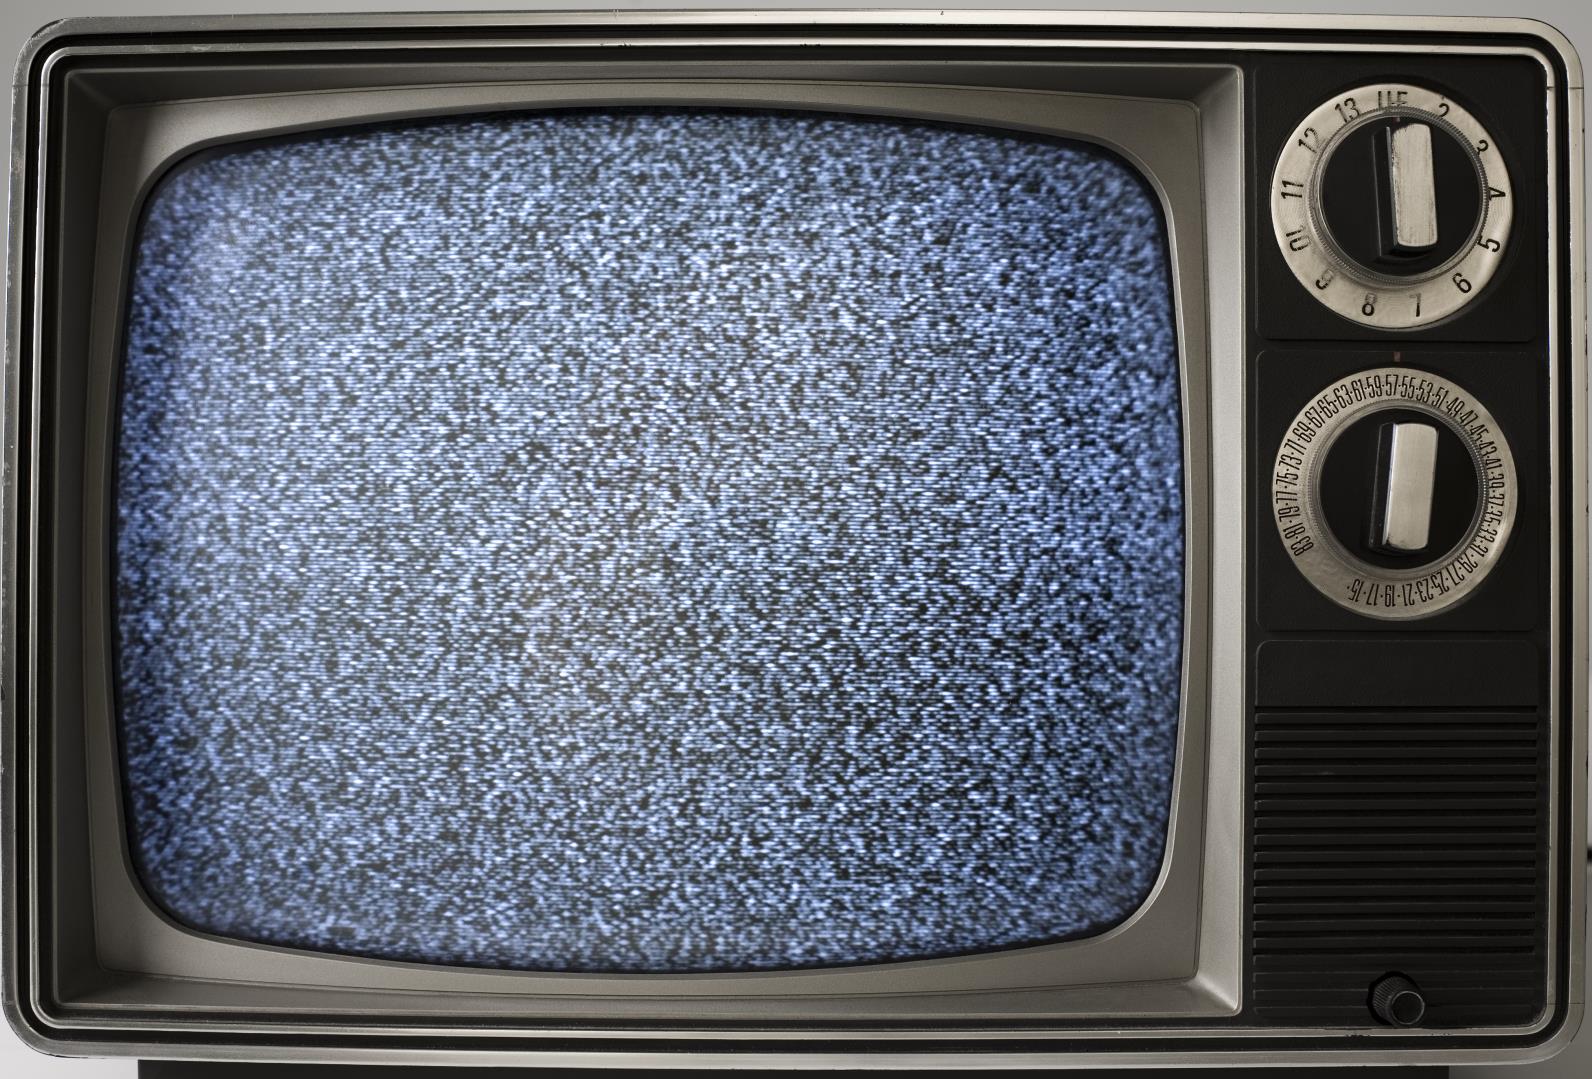 Телевизионный экран. Старый телевизор. Старый телевизор с помехами. Экран телевизора. Текстура телевизора.